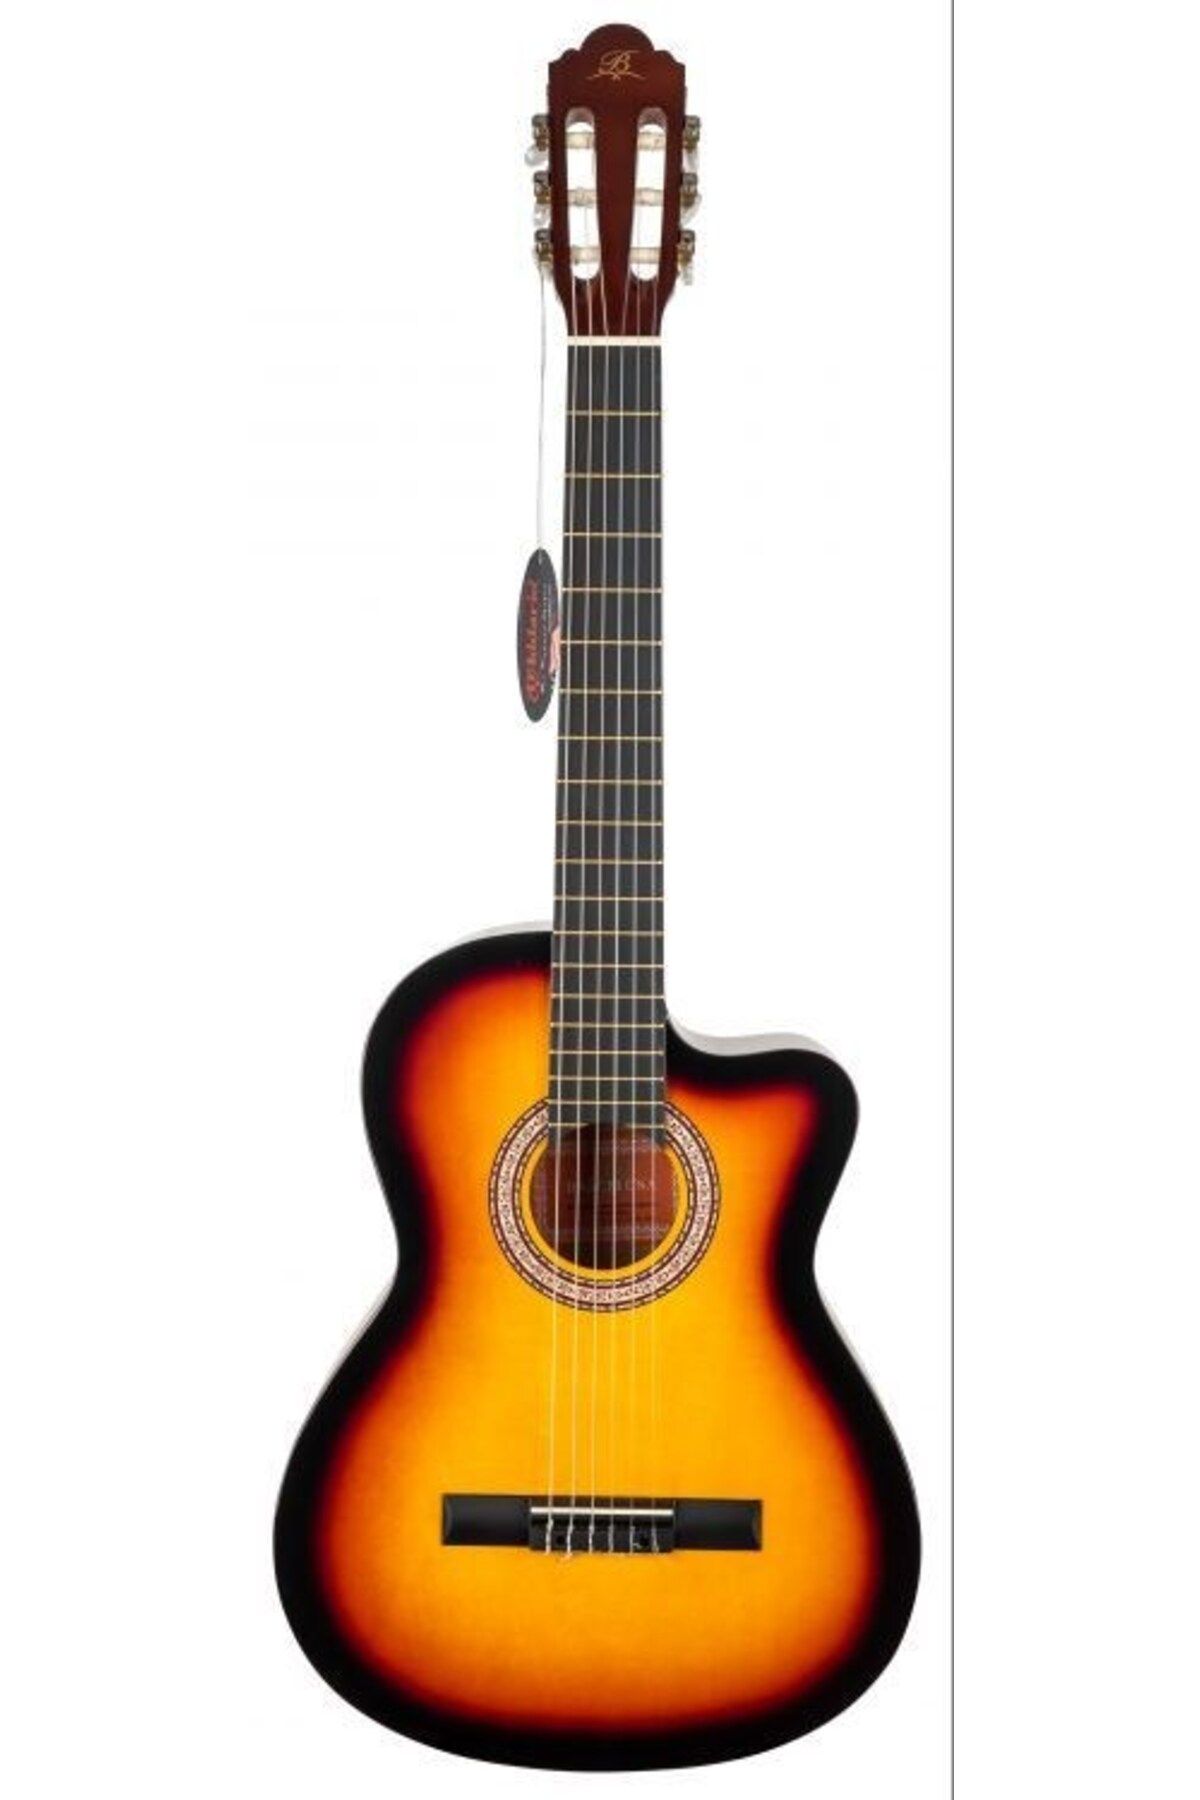 Barcelona Lc 3900 Csb / Cutaway Klasik Gitar - Sunburst Renk